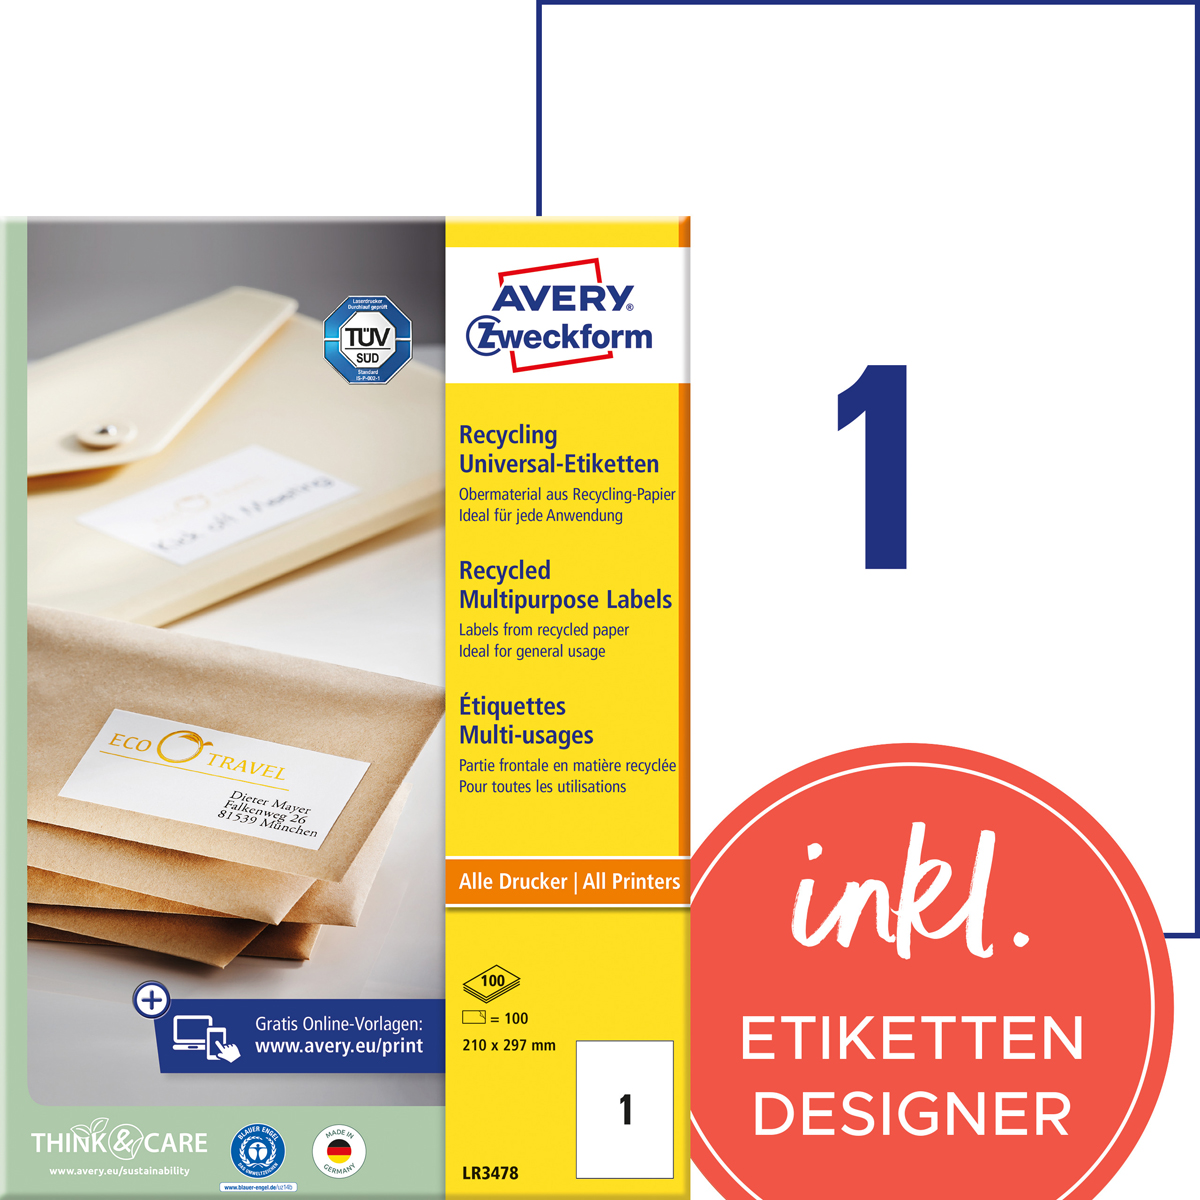 Avery Zweckform LR3478 Recycling, Universal-Etiketten, 210 x 297 mm, 100 Bogen/100